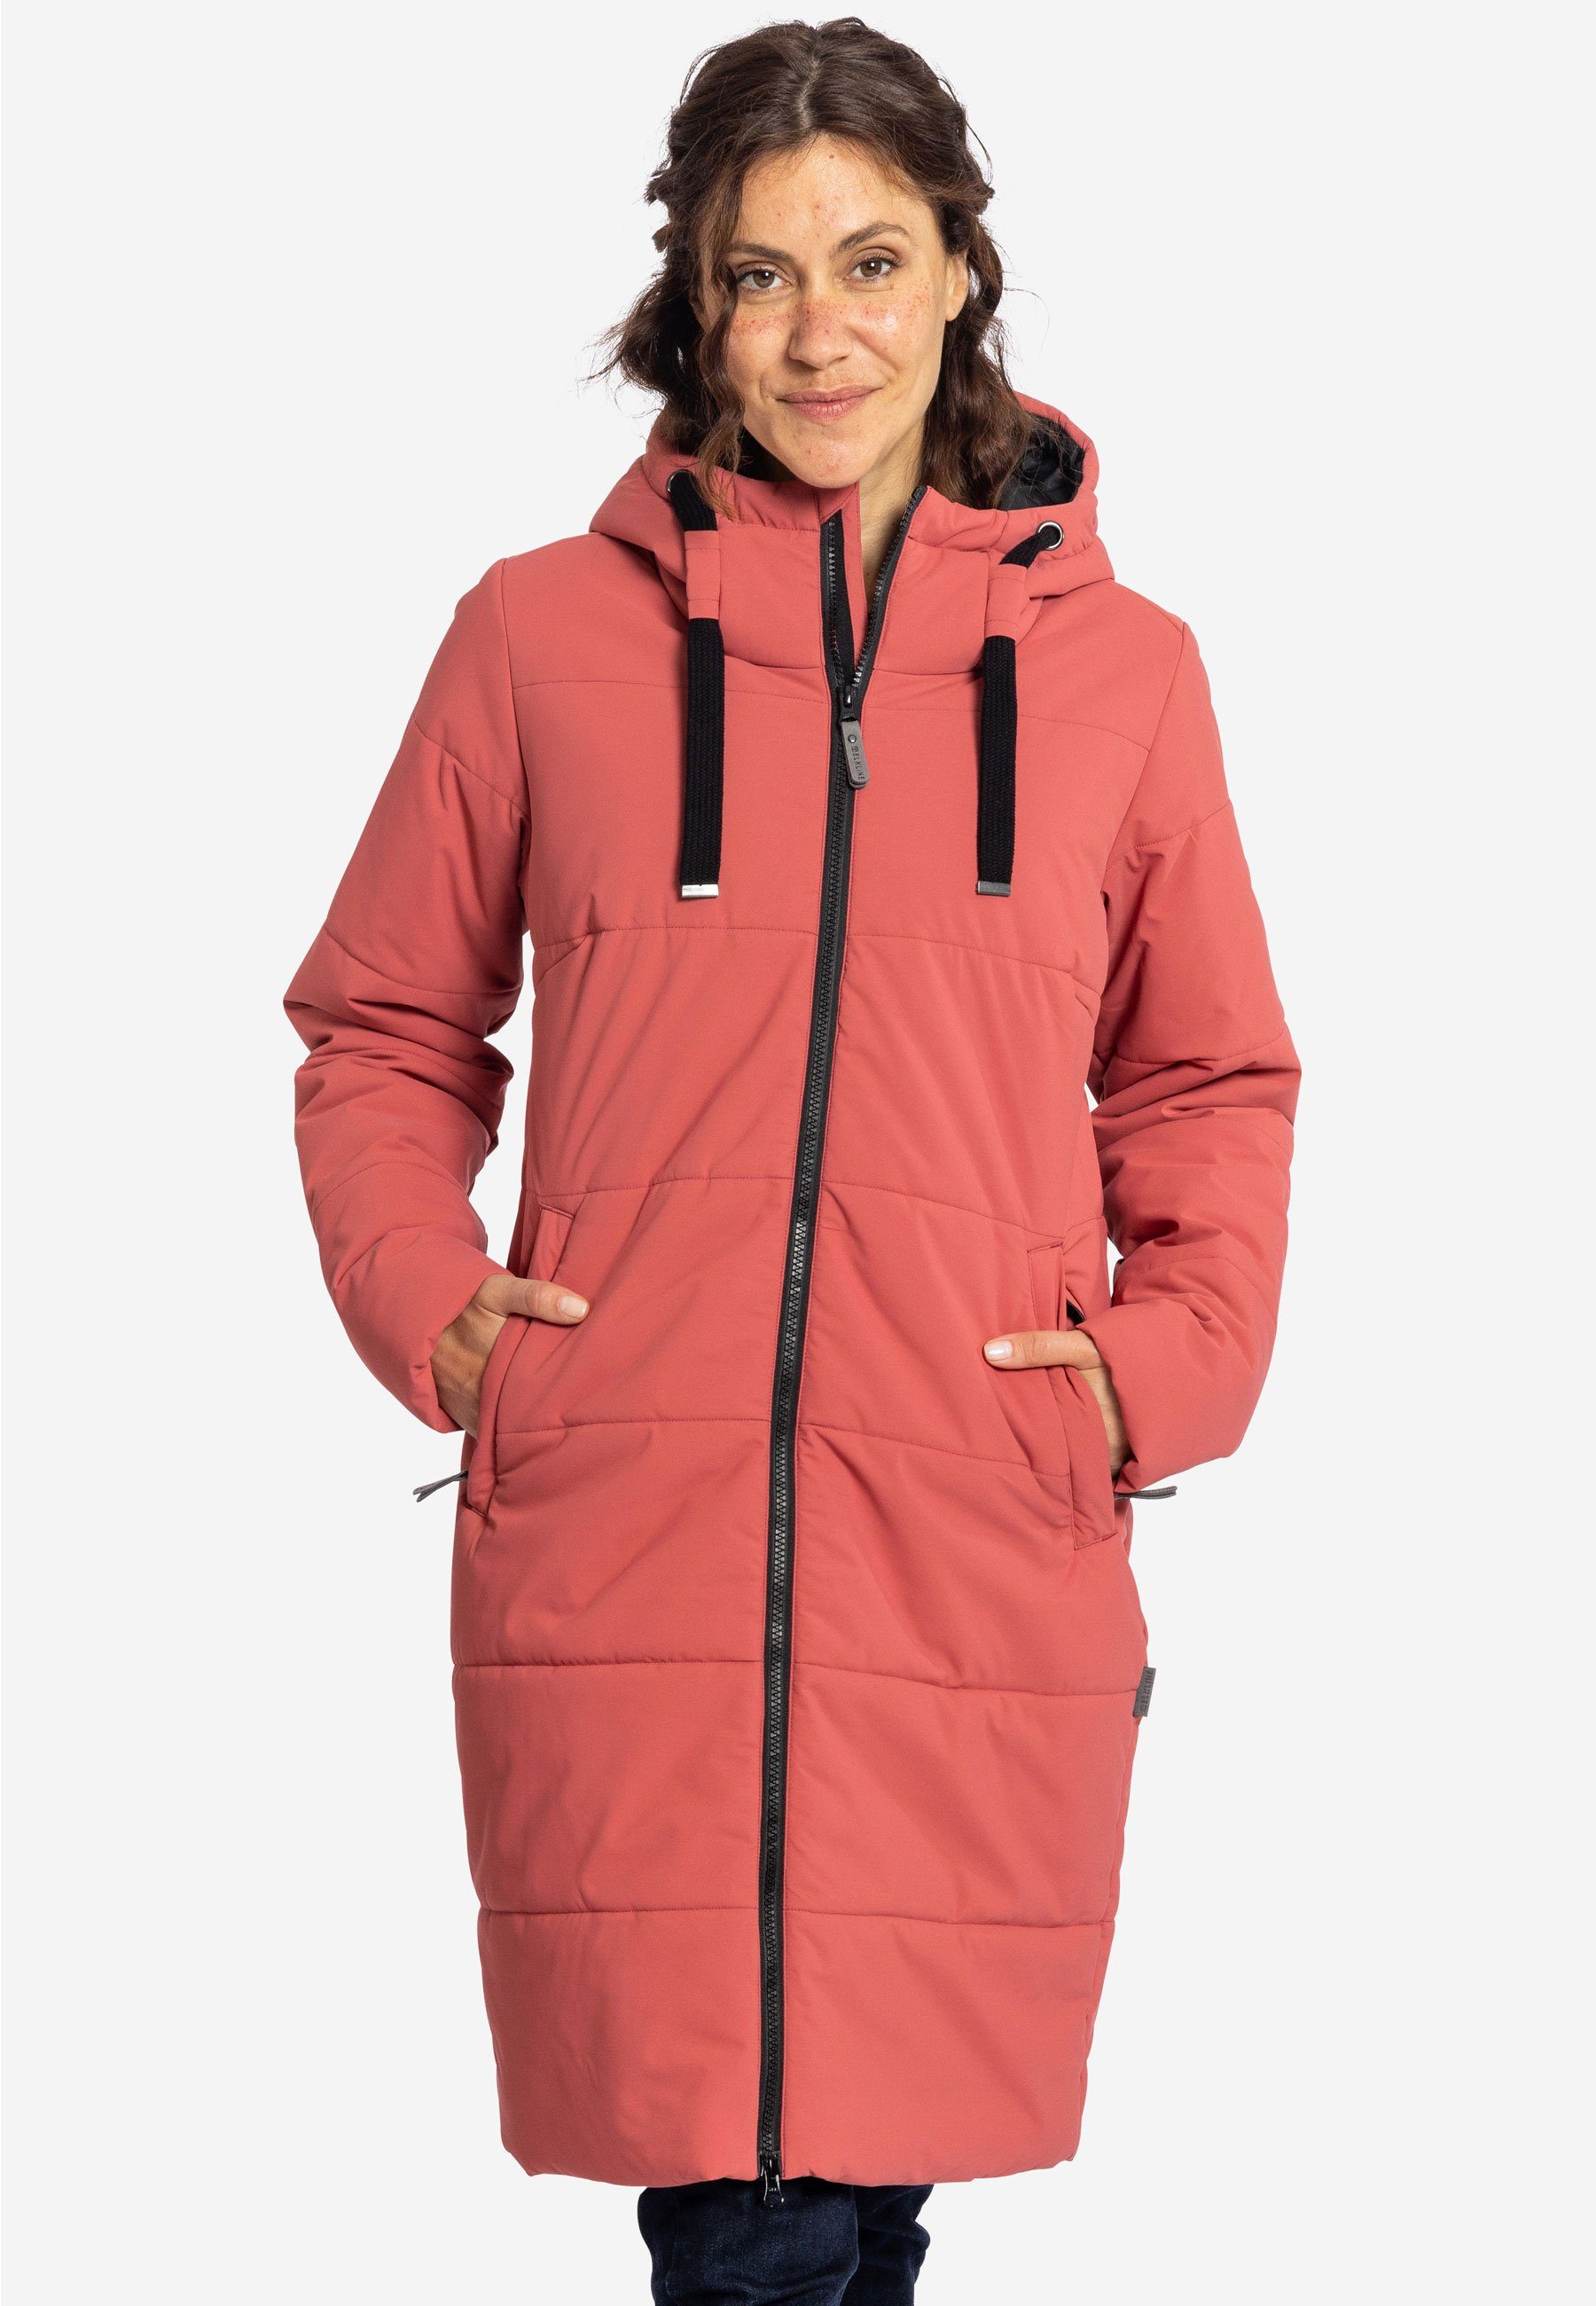 Winterjacke leichter Elkline langer mineralred Mantel, 2-Wege-Reißverschluss Comfort